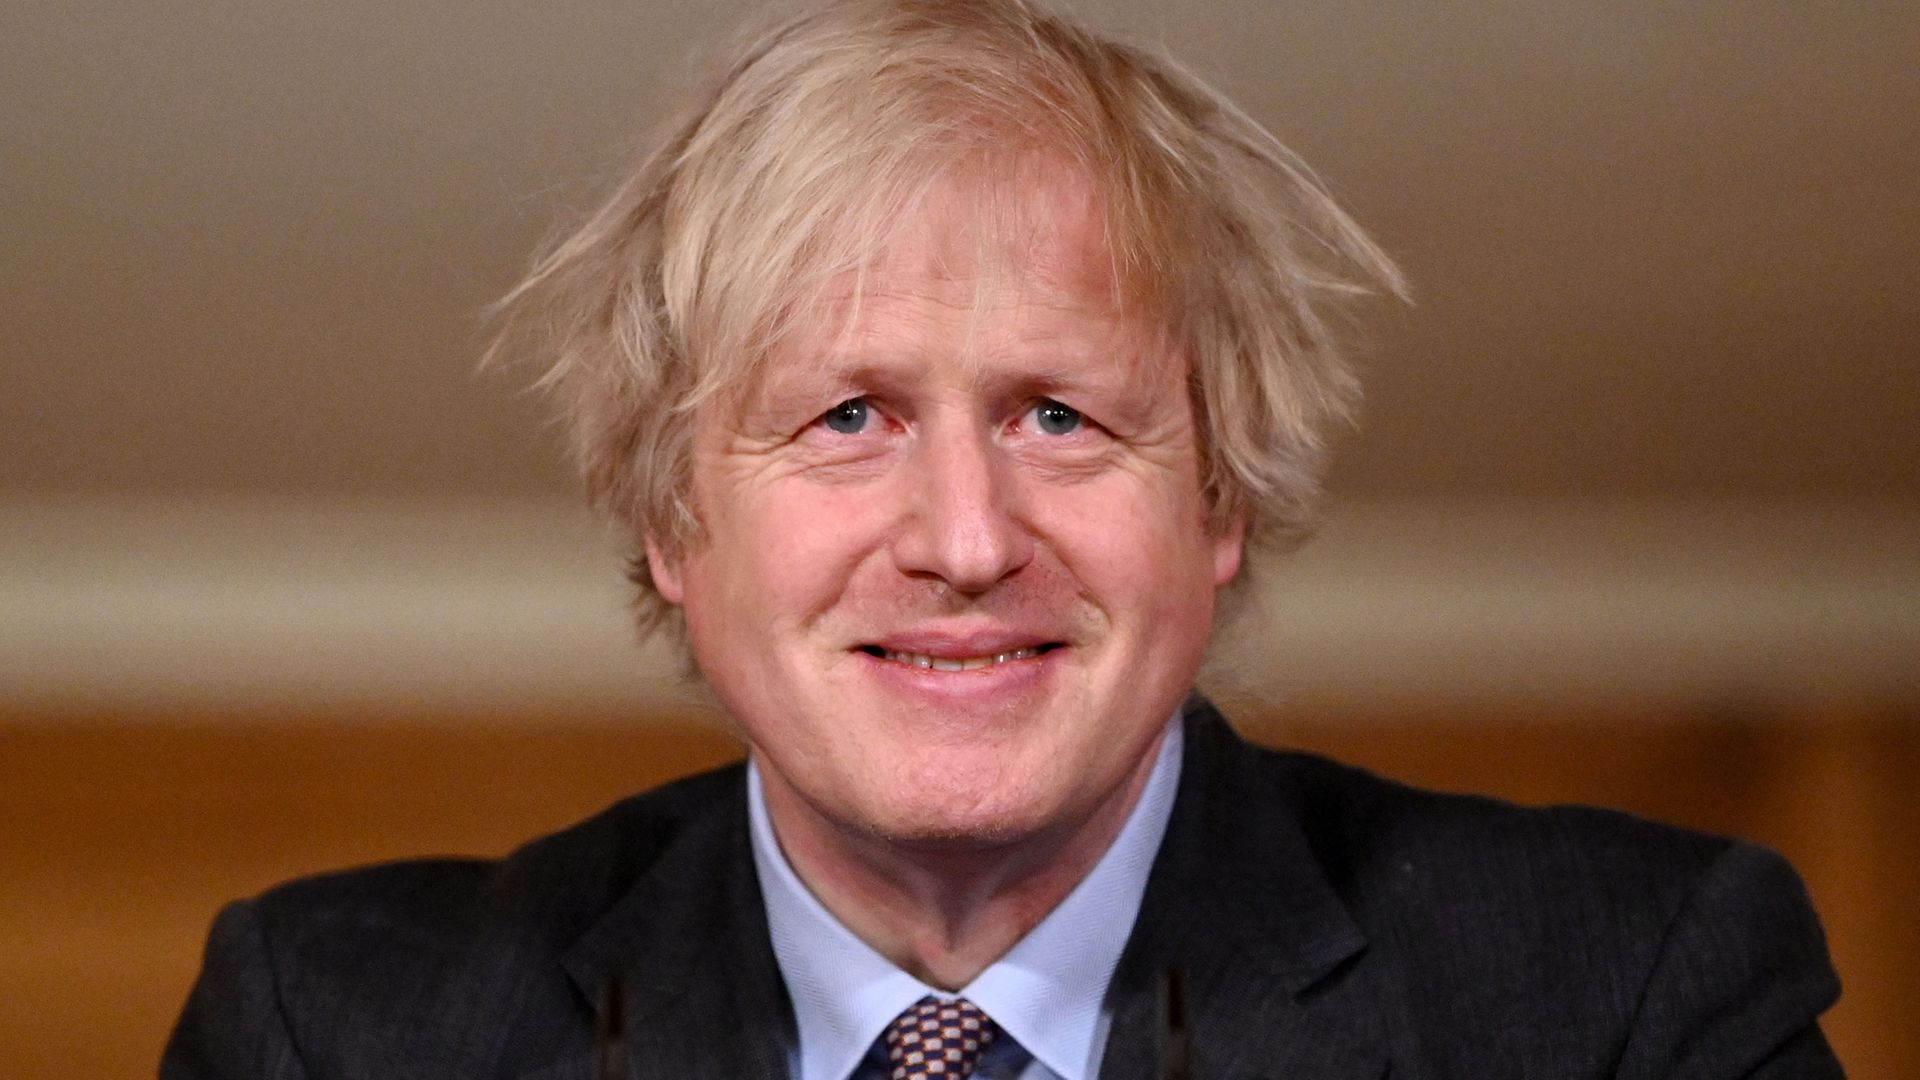 Prime minister Boris Johnson at Downing Street - Credit: PA